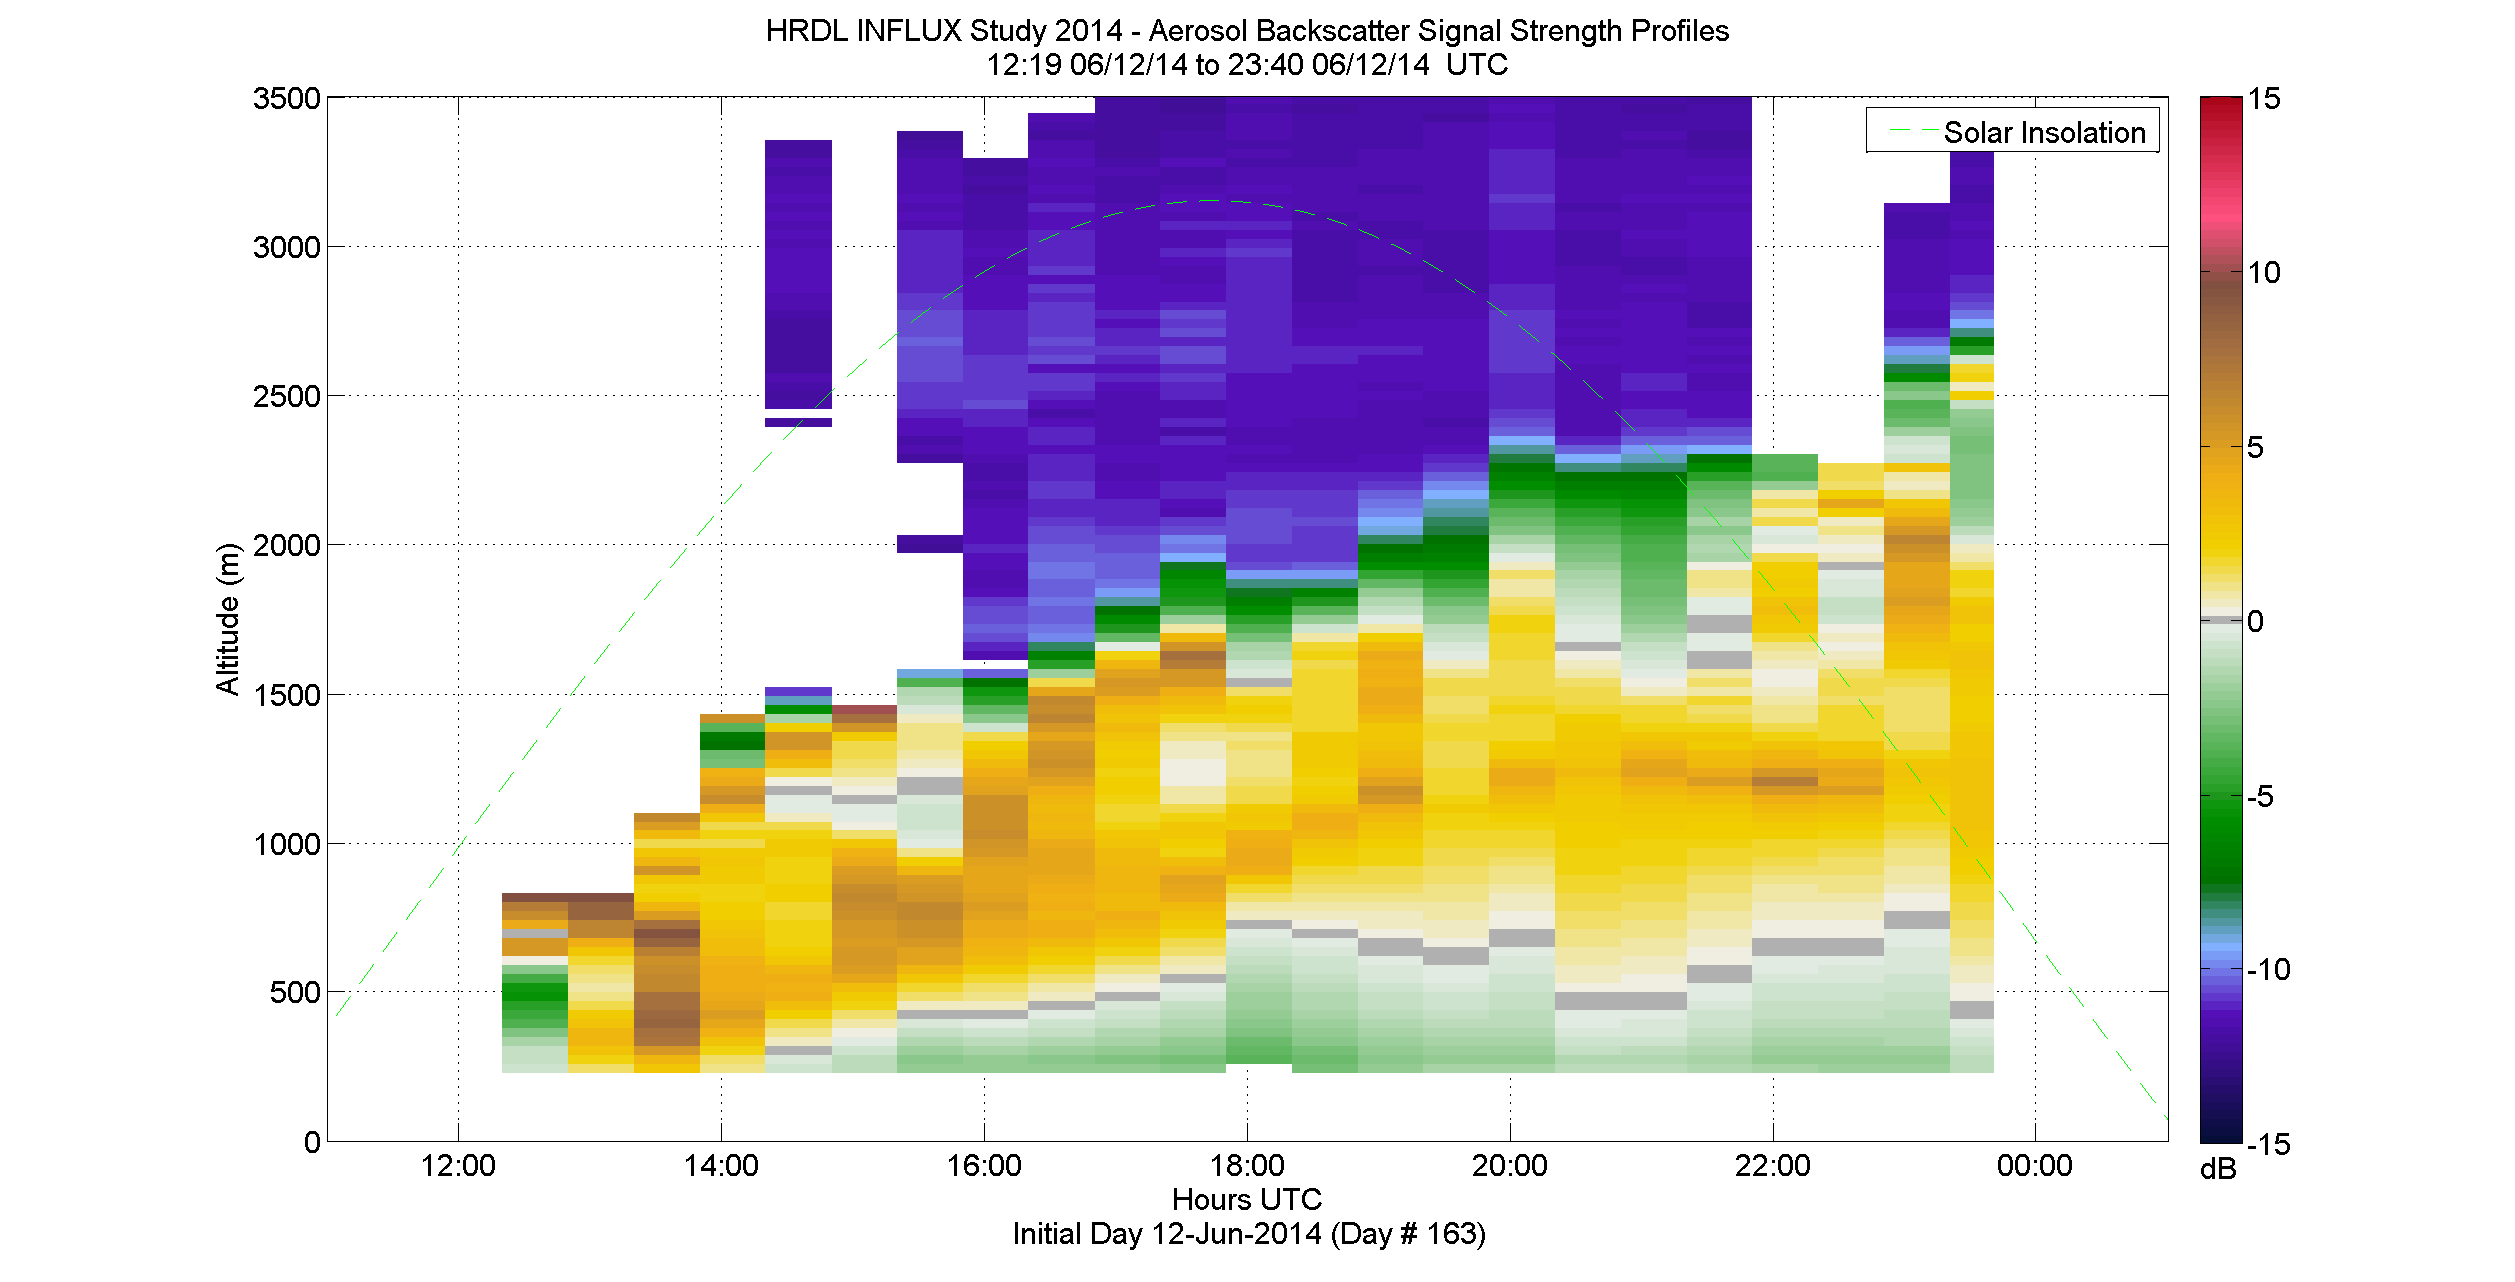 HRDL aerosol backscatter signal strength profile - June 12 pm